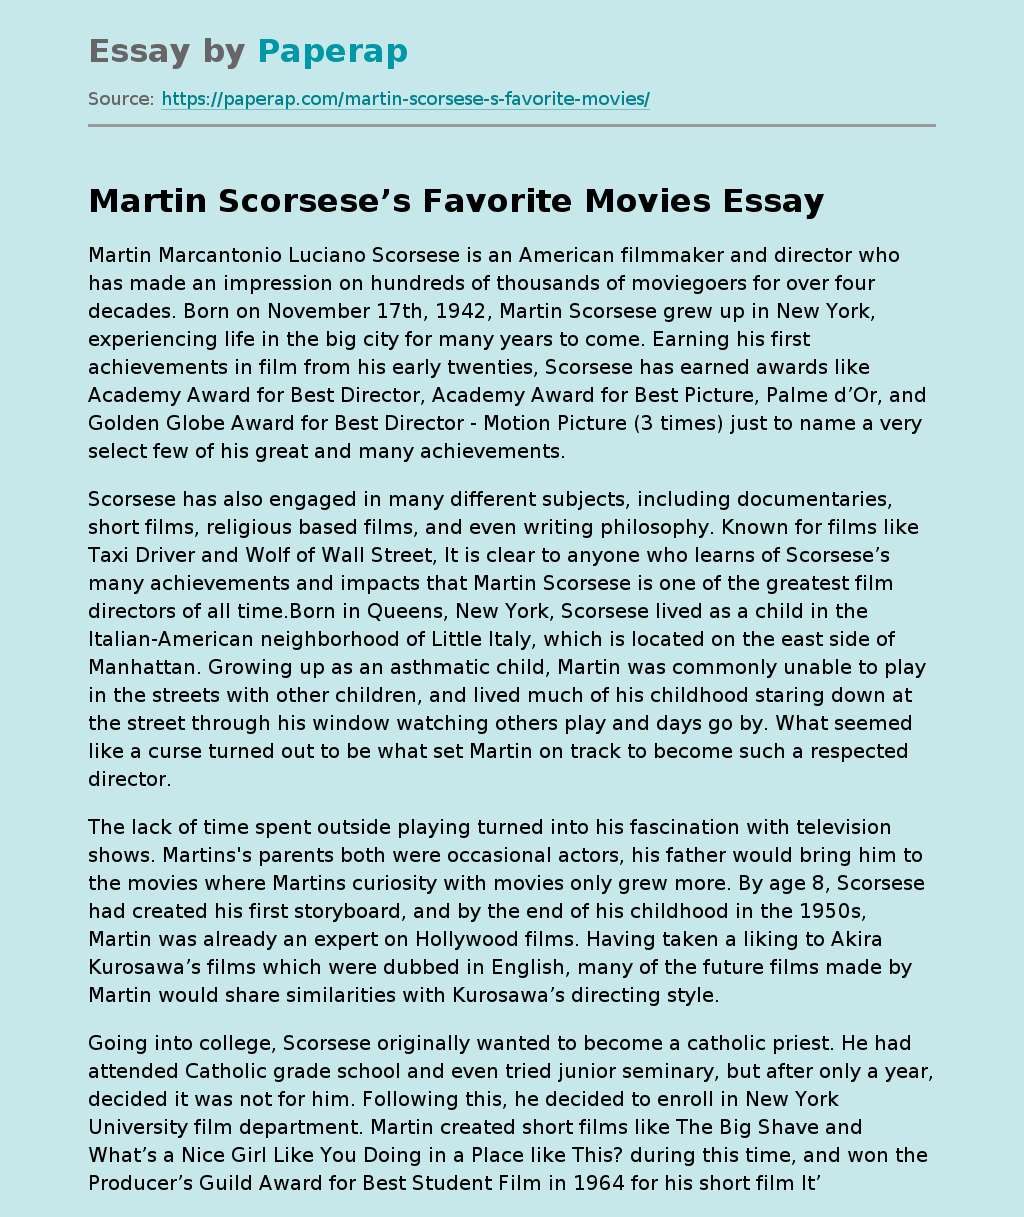 Martin Scorsese’s Favorite Movies